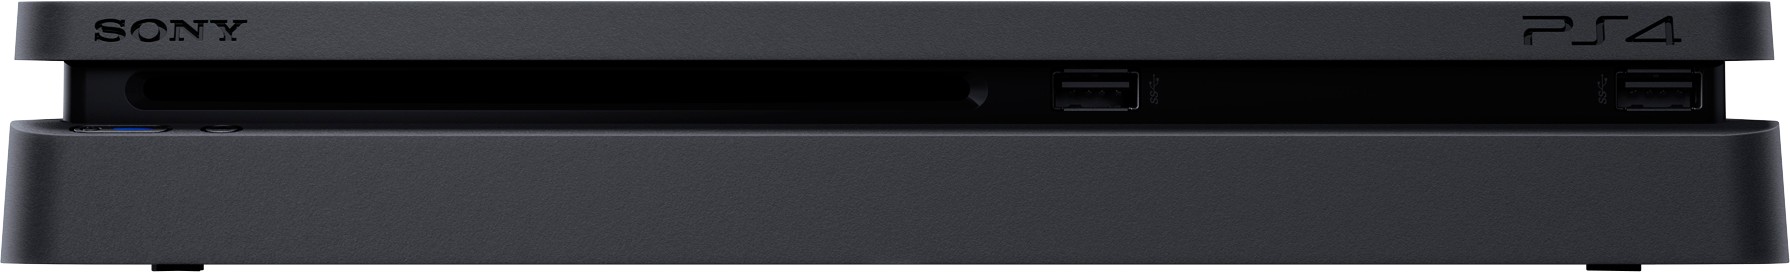 PlayStation 4 Slim (1TB, Jet Black) + Uncharted 4 + Bloodborne + No Man's Sky + In-ear headset